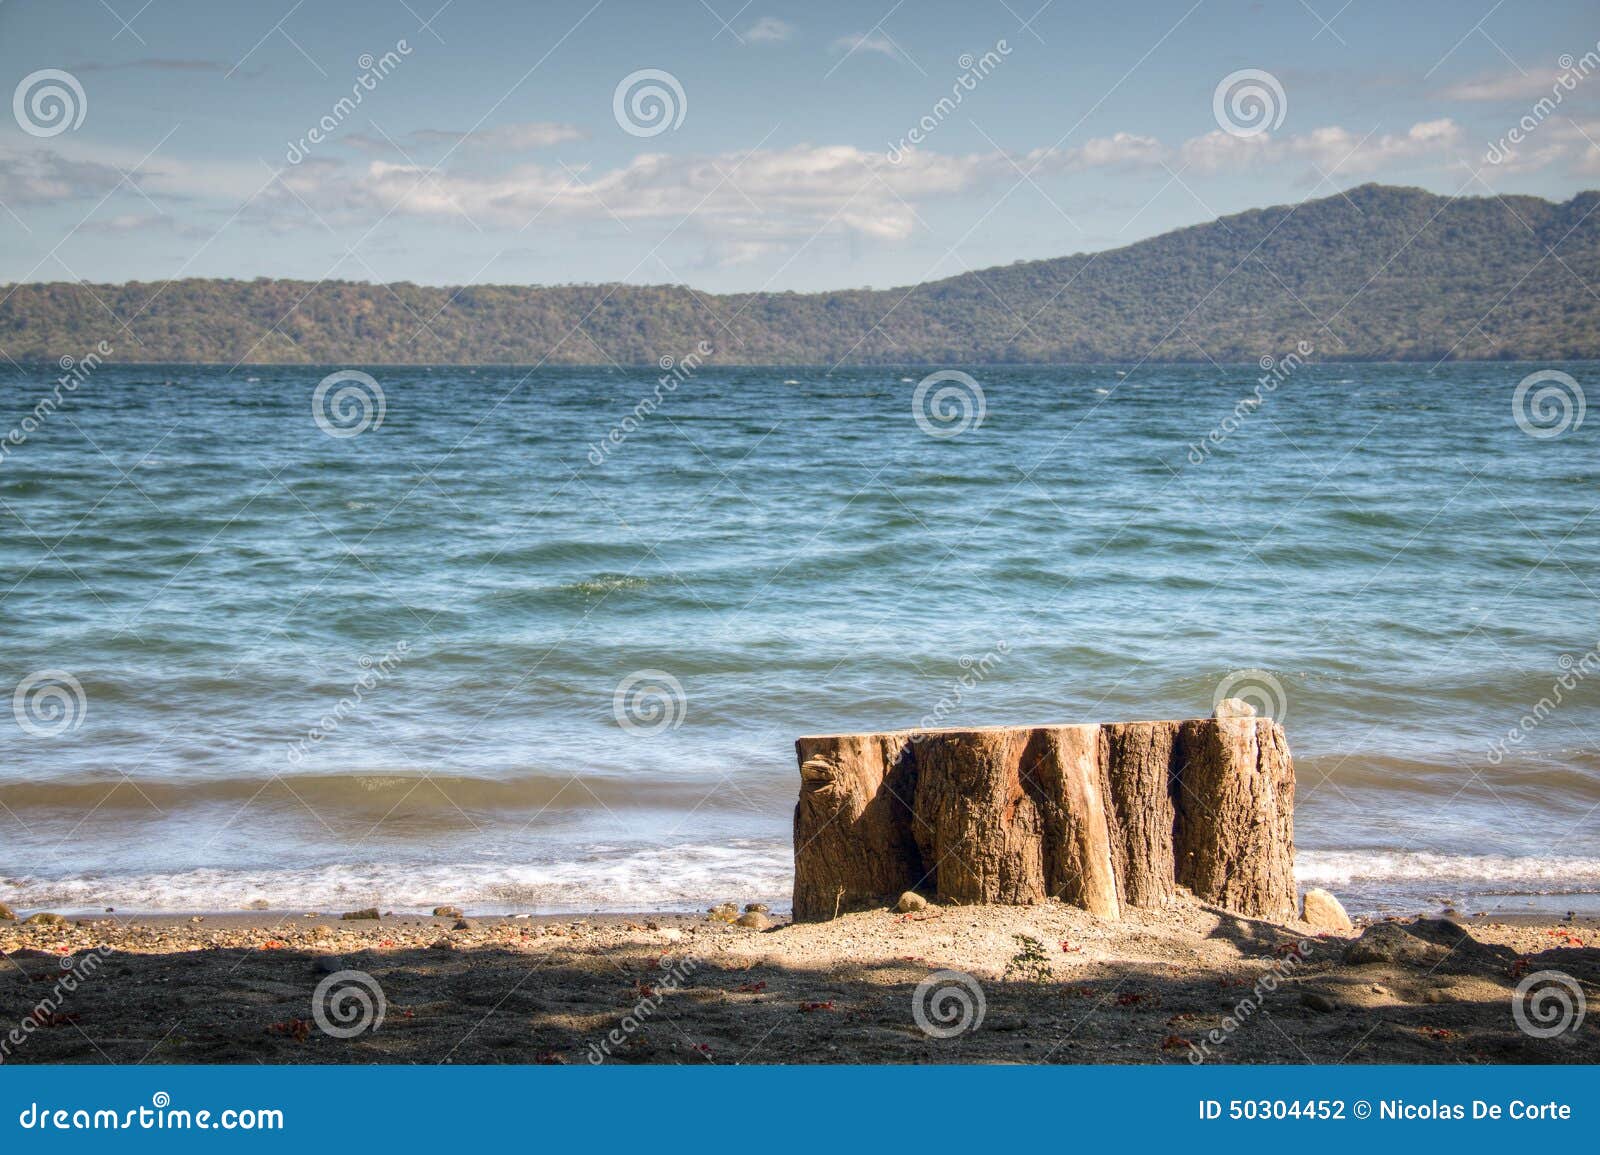 tree at the shore of lake apoyo near granada, nicaragua